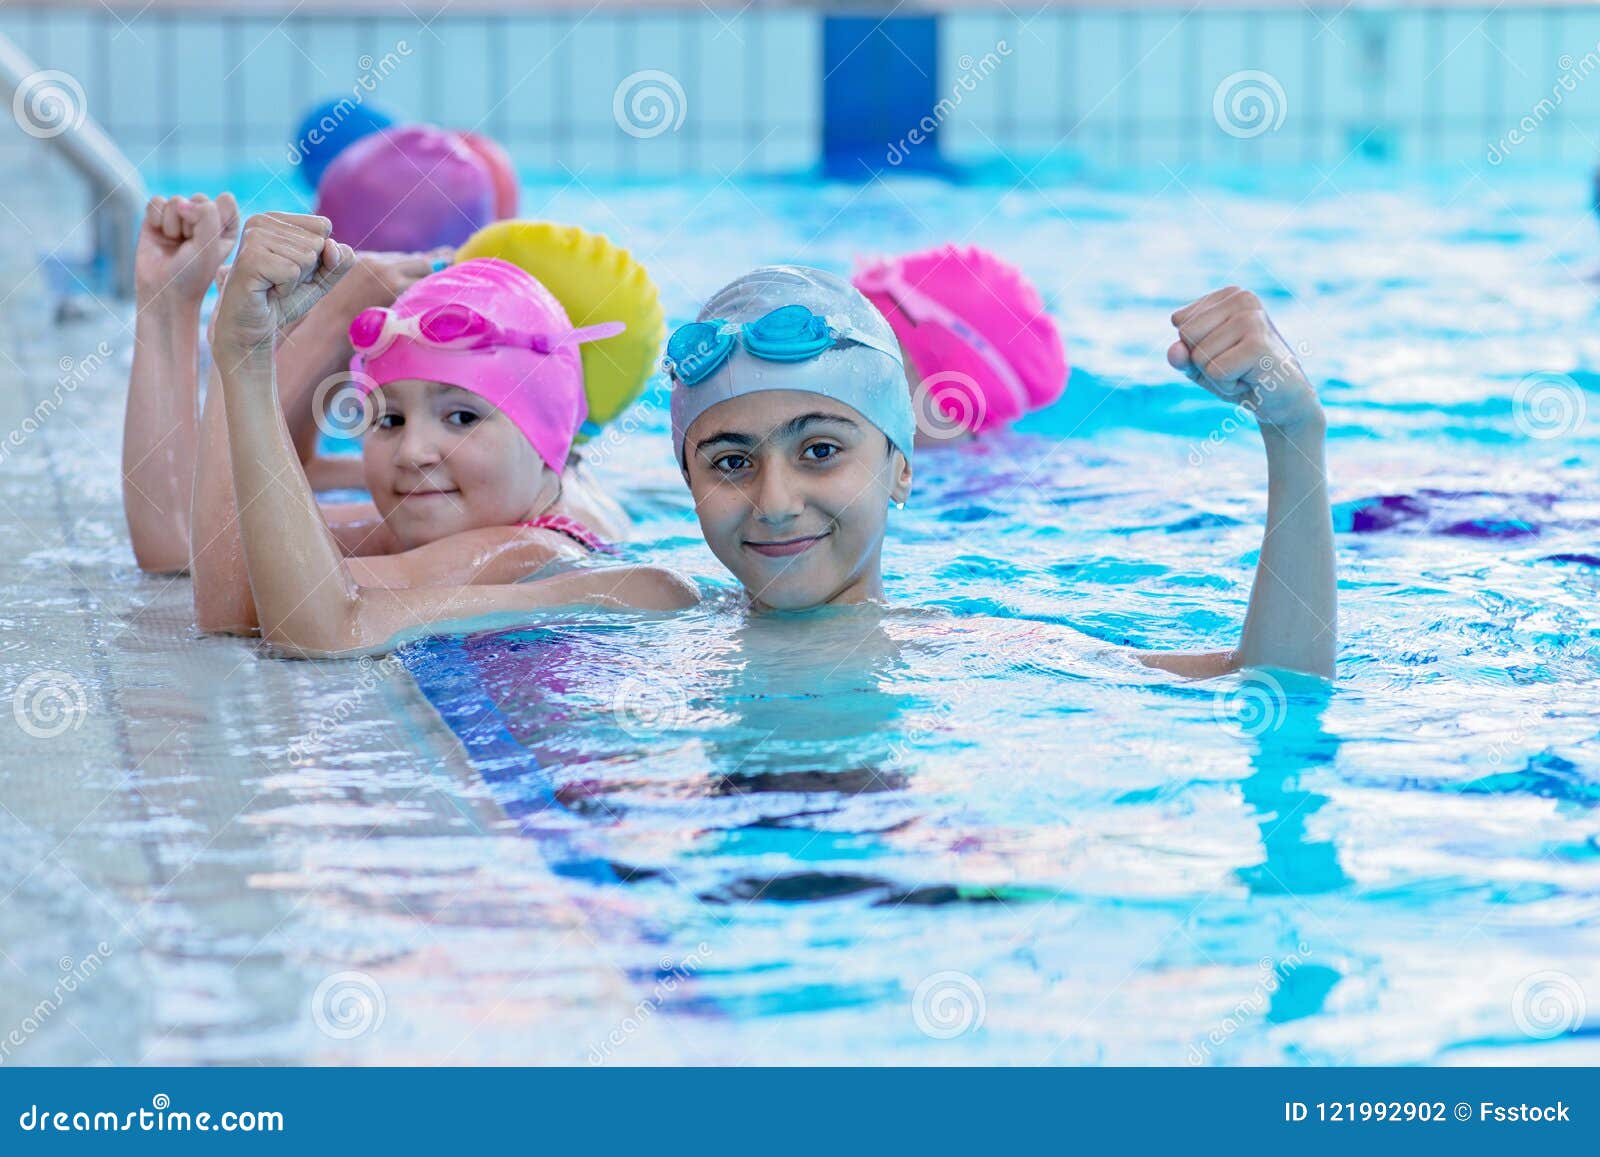 swimming pool pose | Pool poses, Swimming, Swimming pools